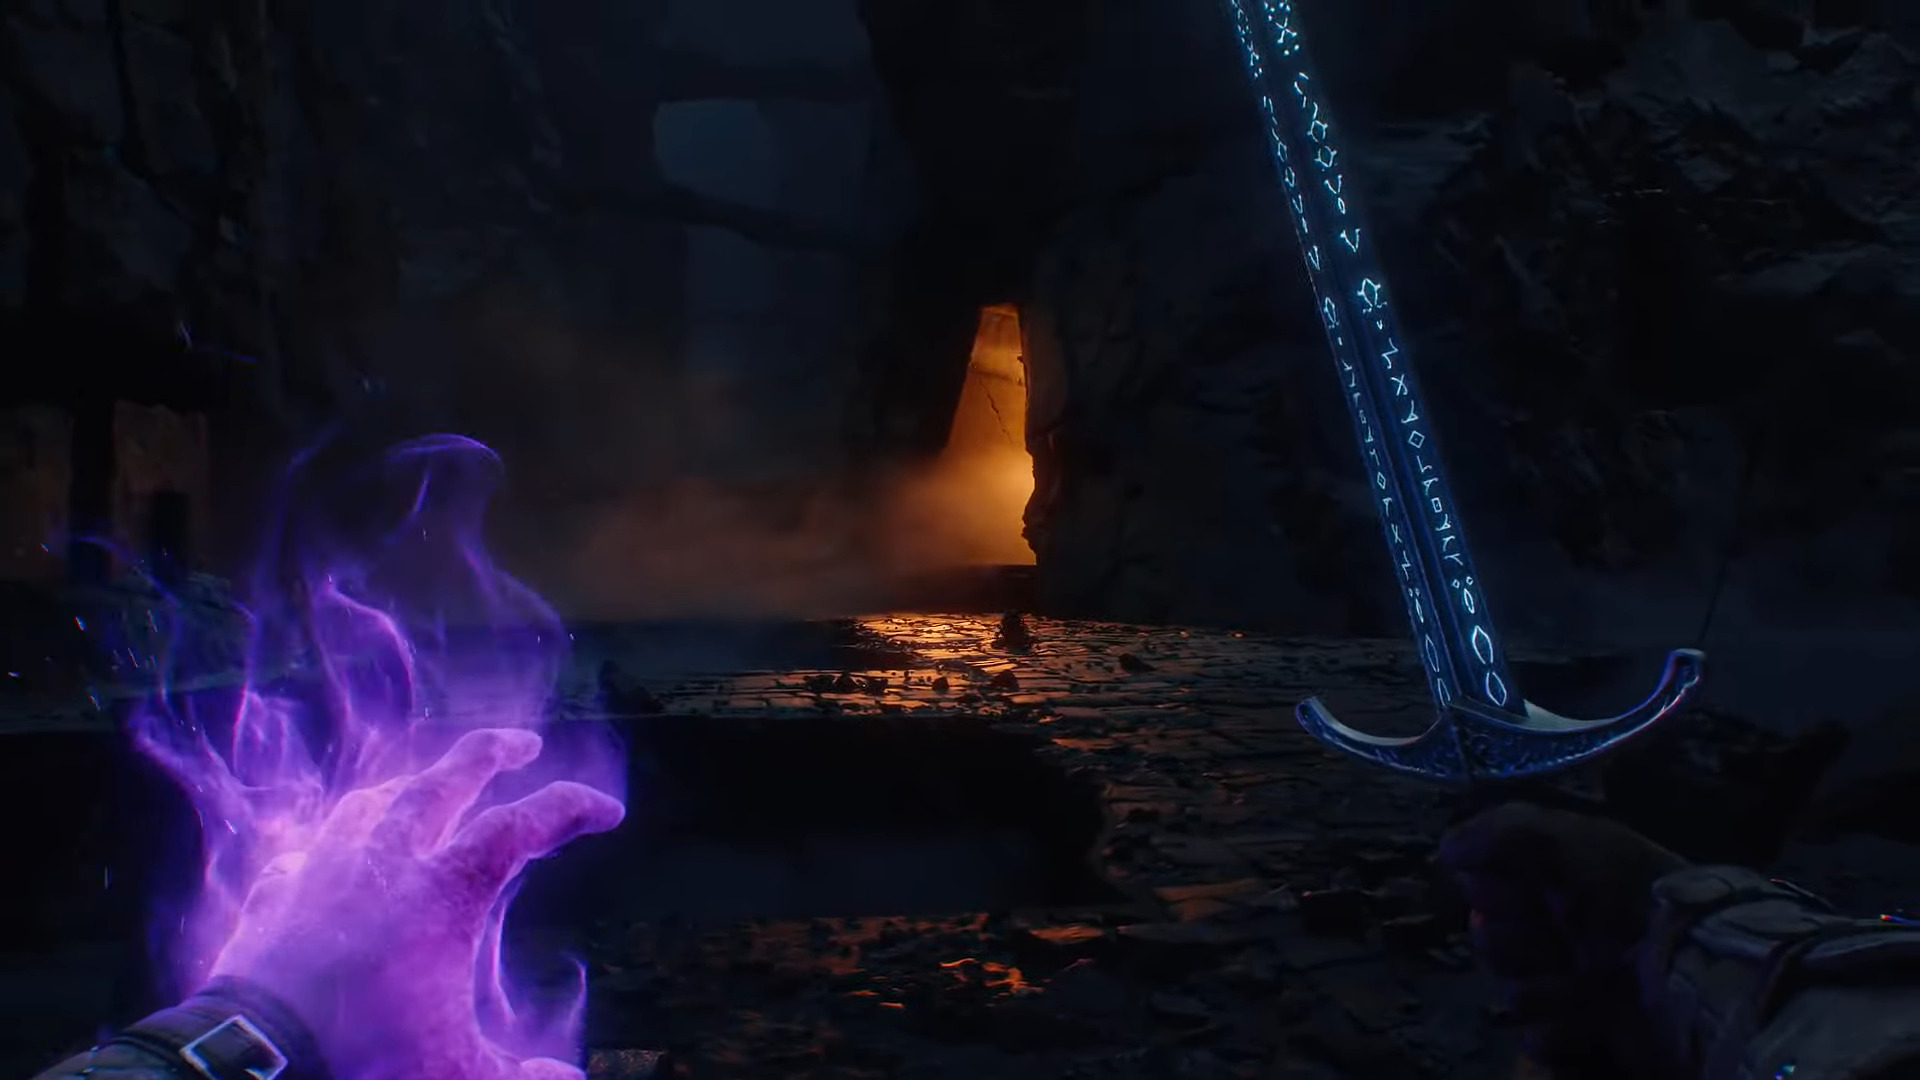 Obsidian Studio New Fantasy Title Avowed Trailer Released – New Game Set In Pillars Of Eternity World